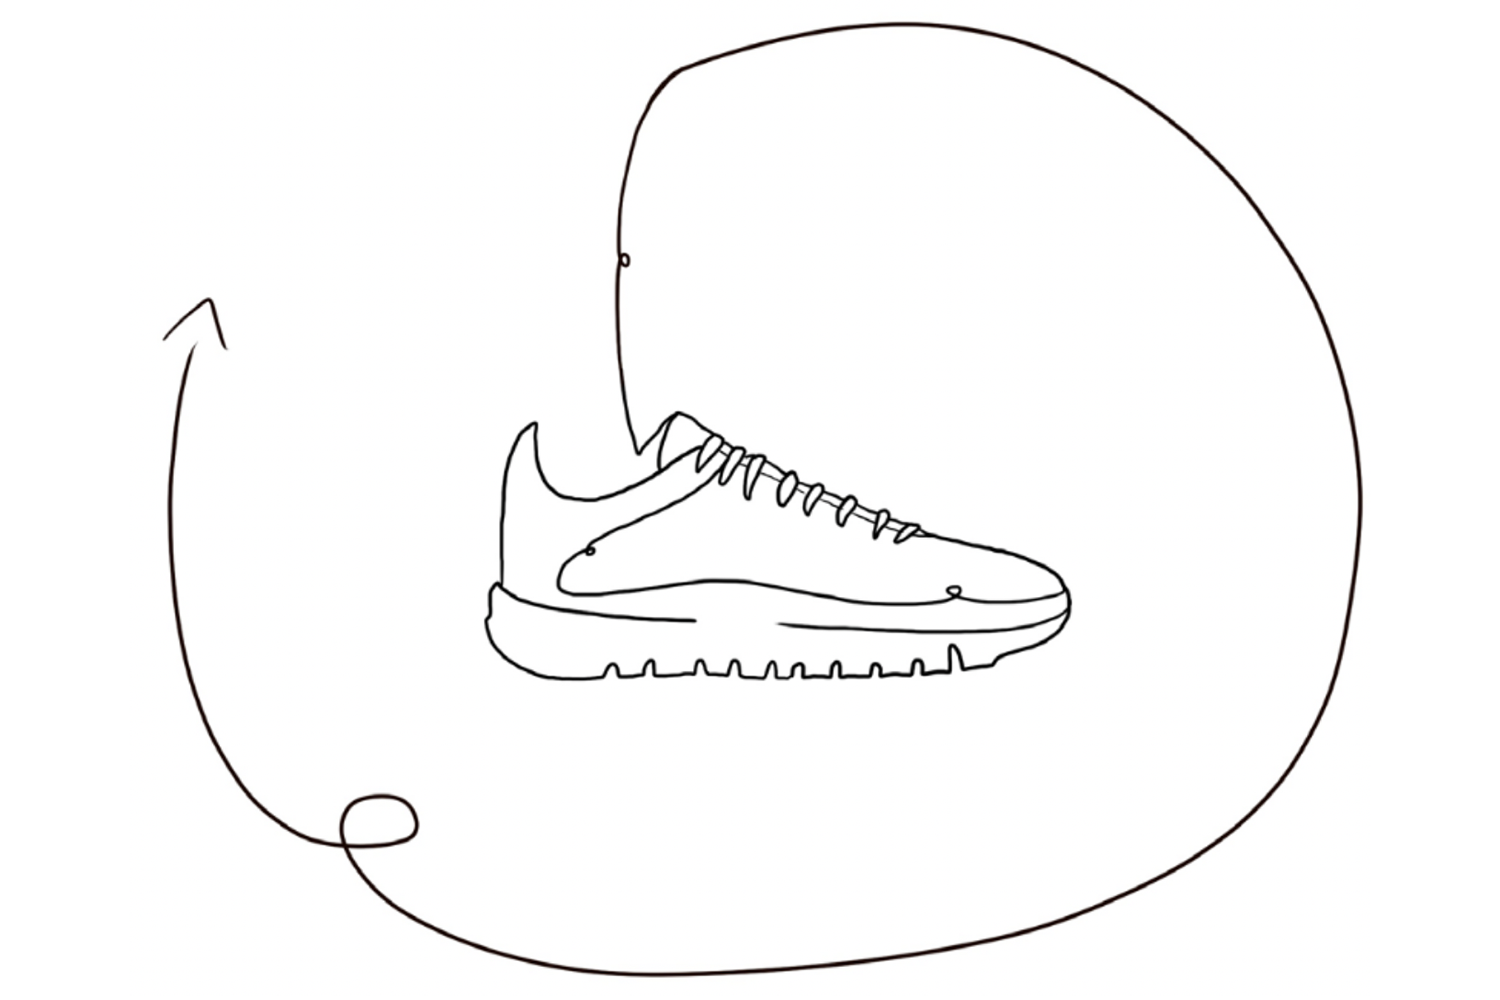 3 Questions: A roadmap toward circularity in the footwear industry